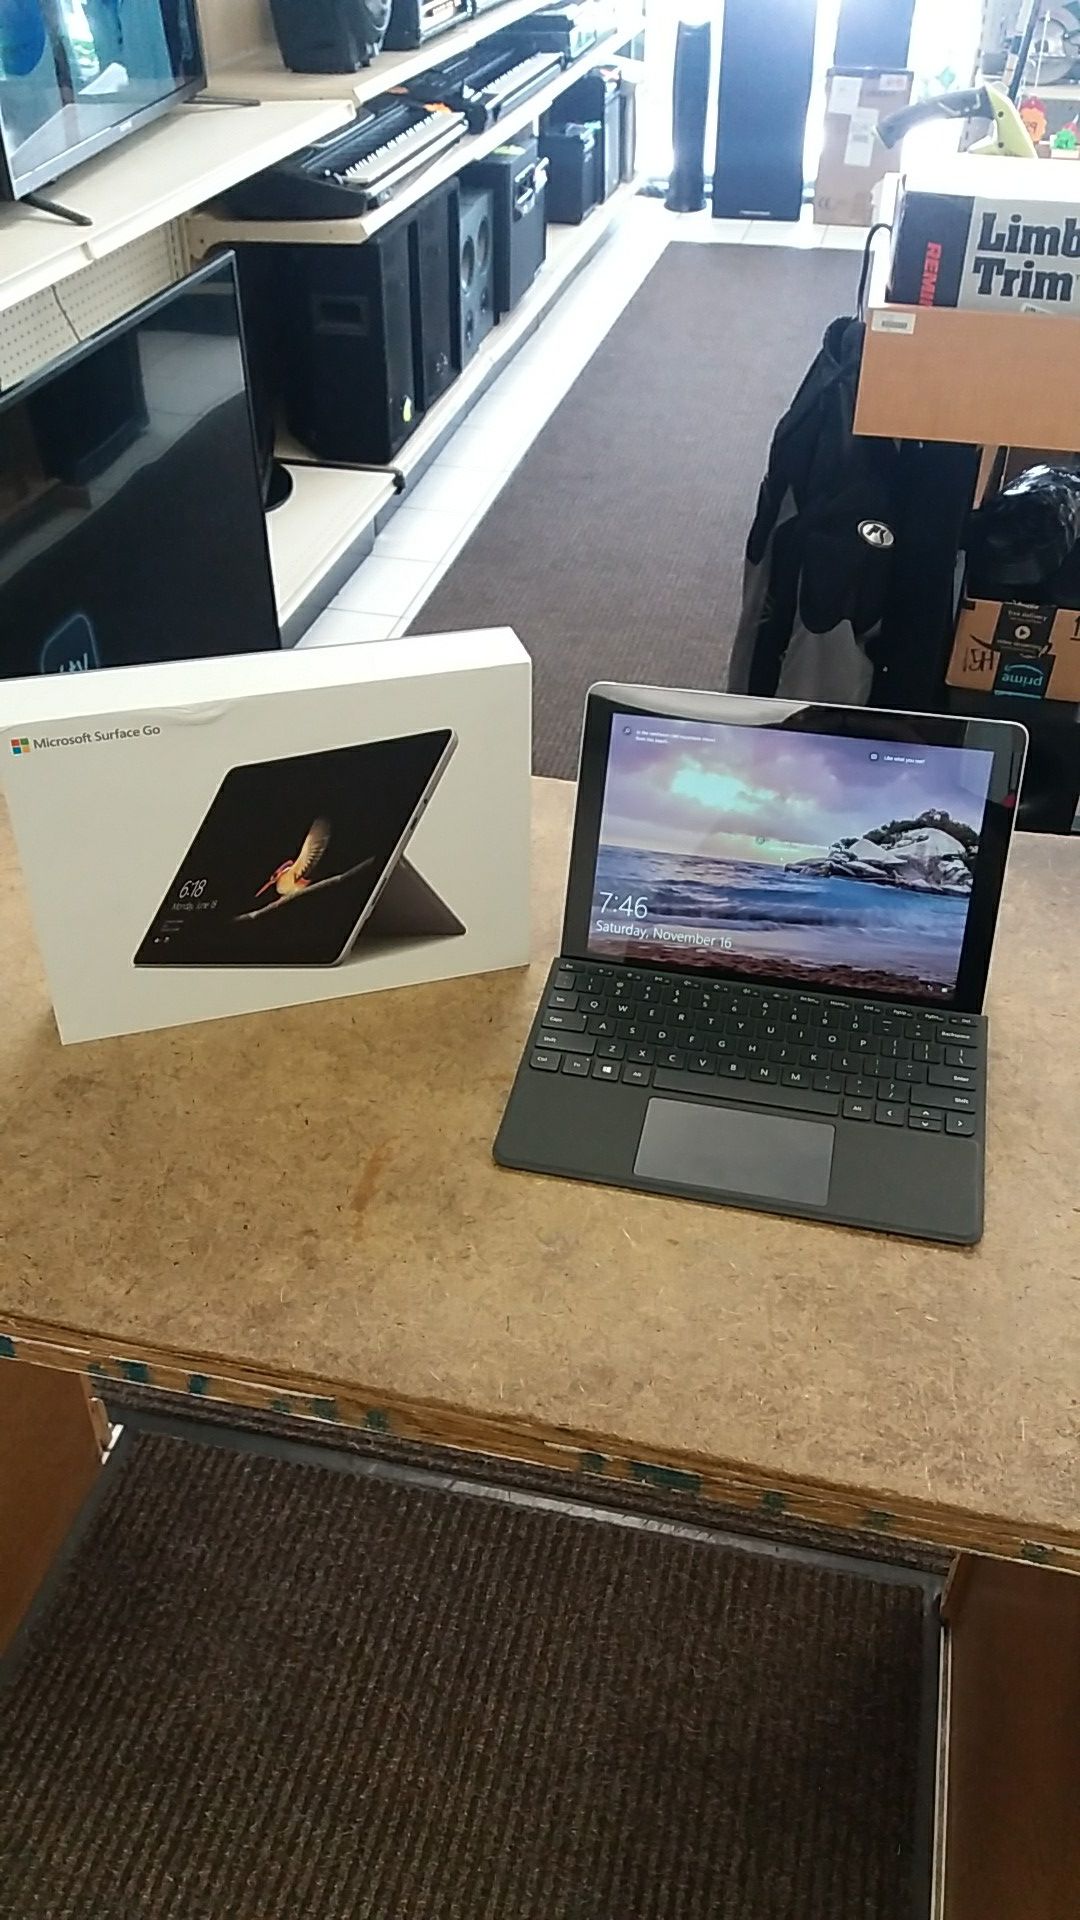 Microsoft Surface Go 1824 Tablet 128GB